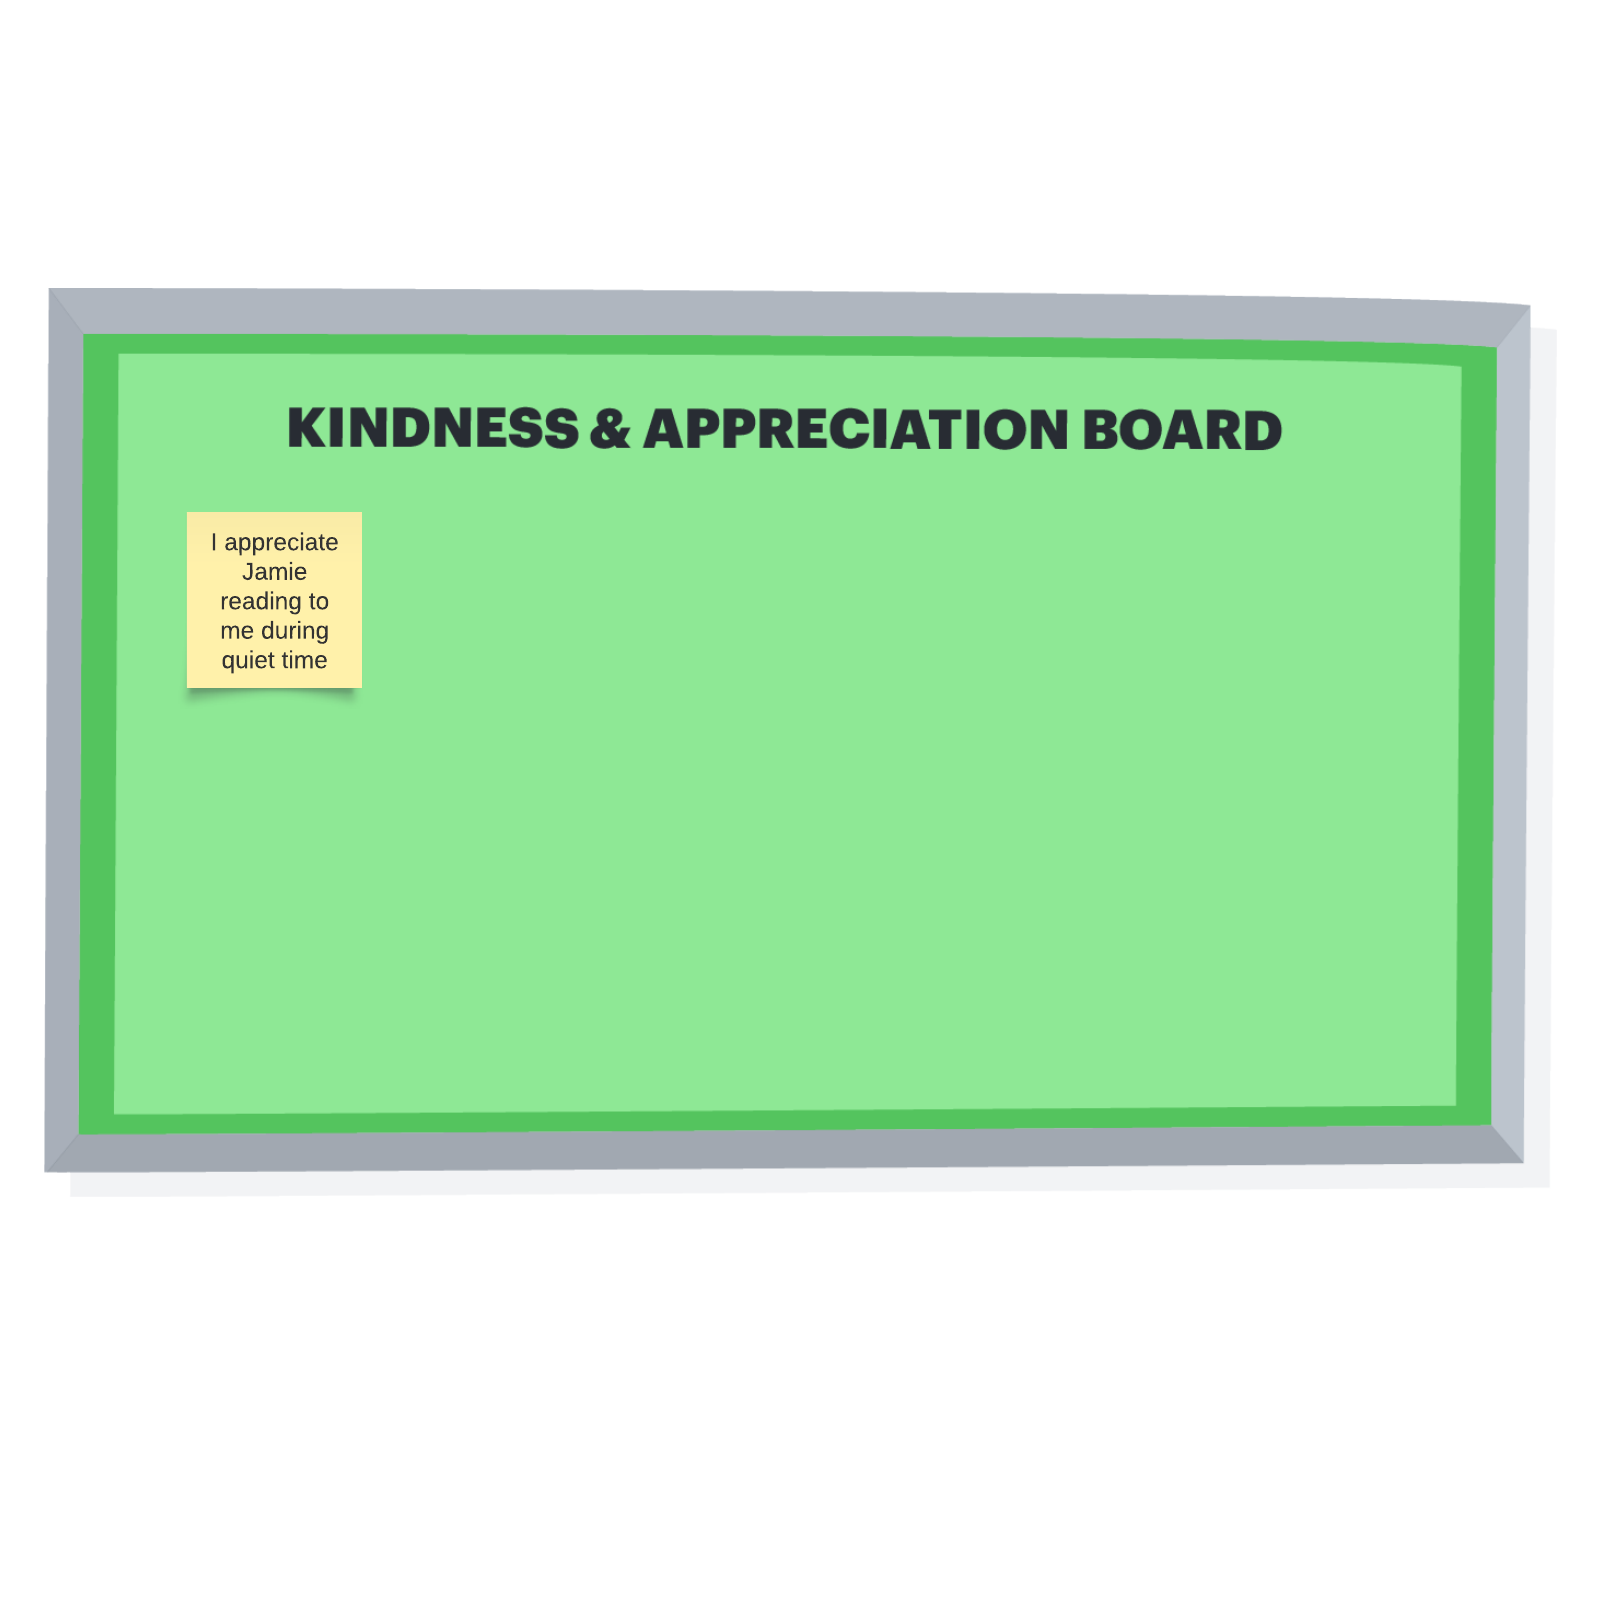 Kindness appreciation board example